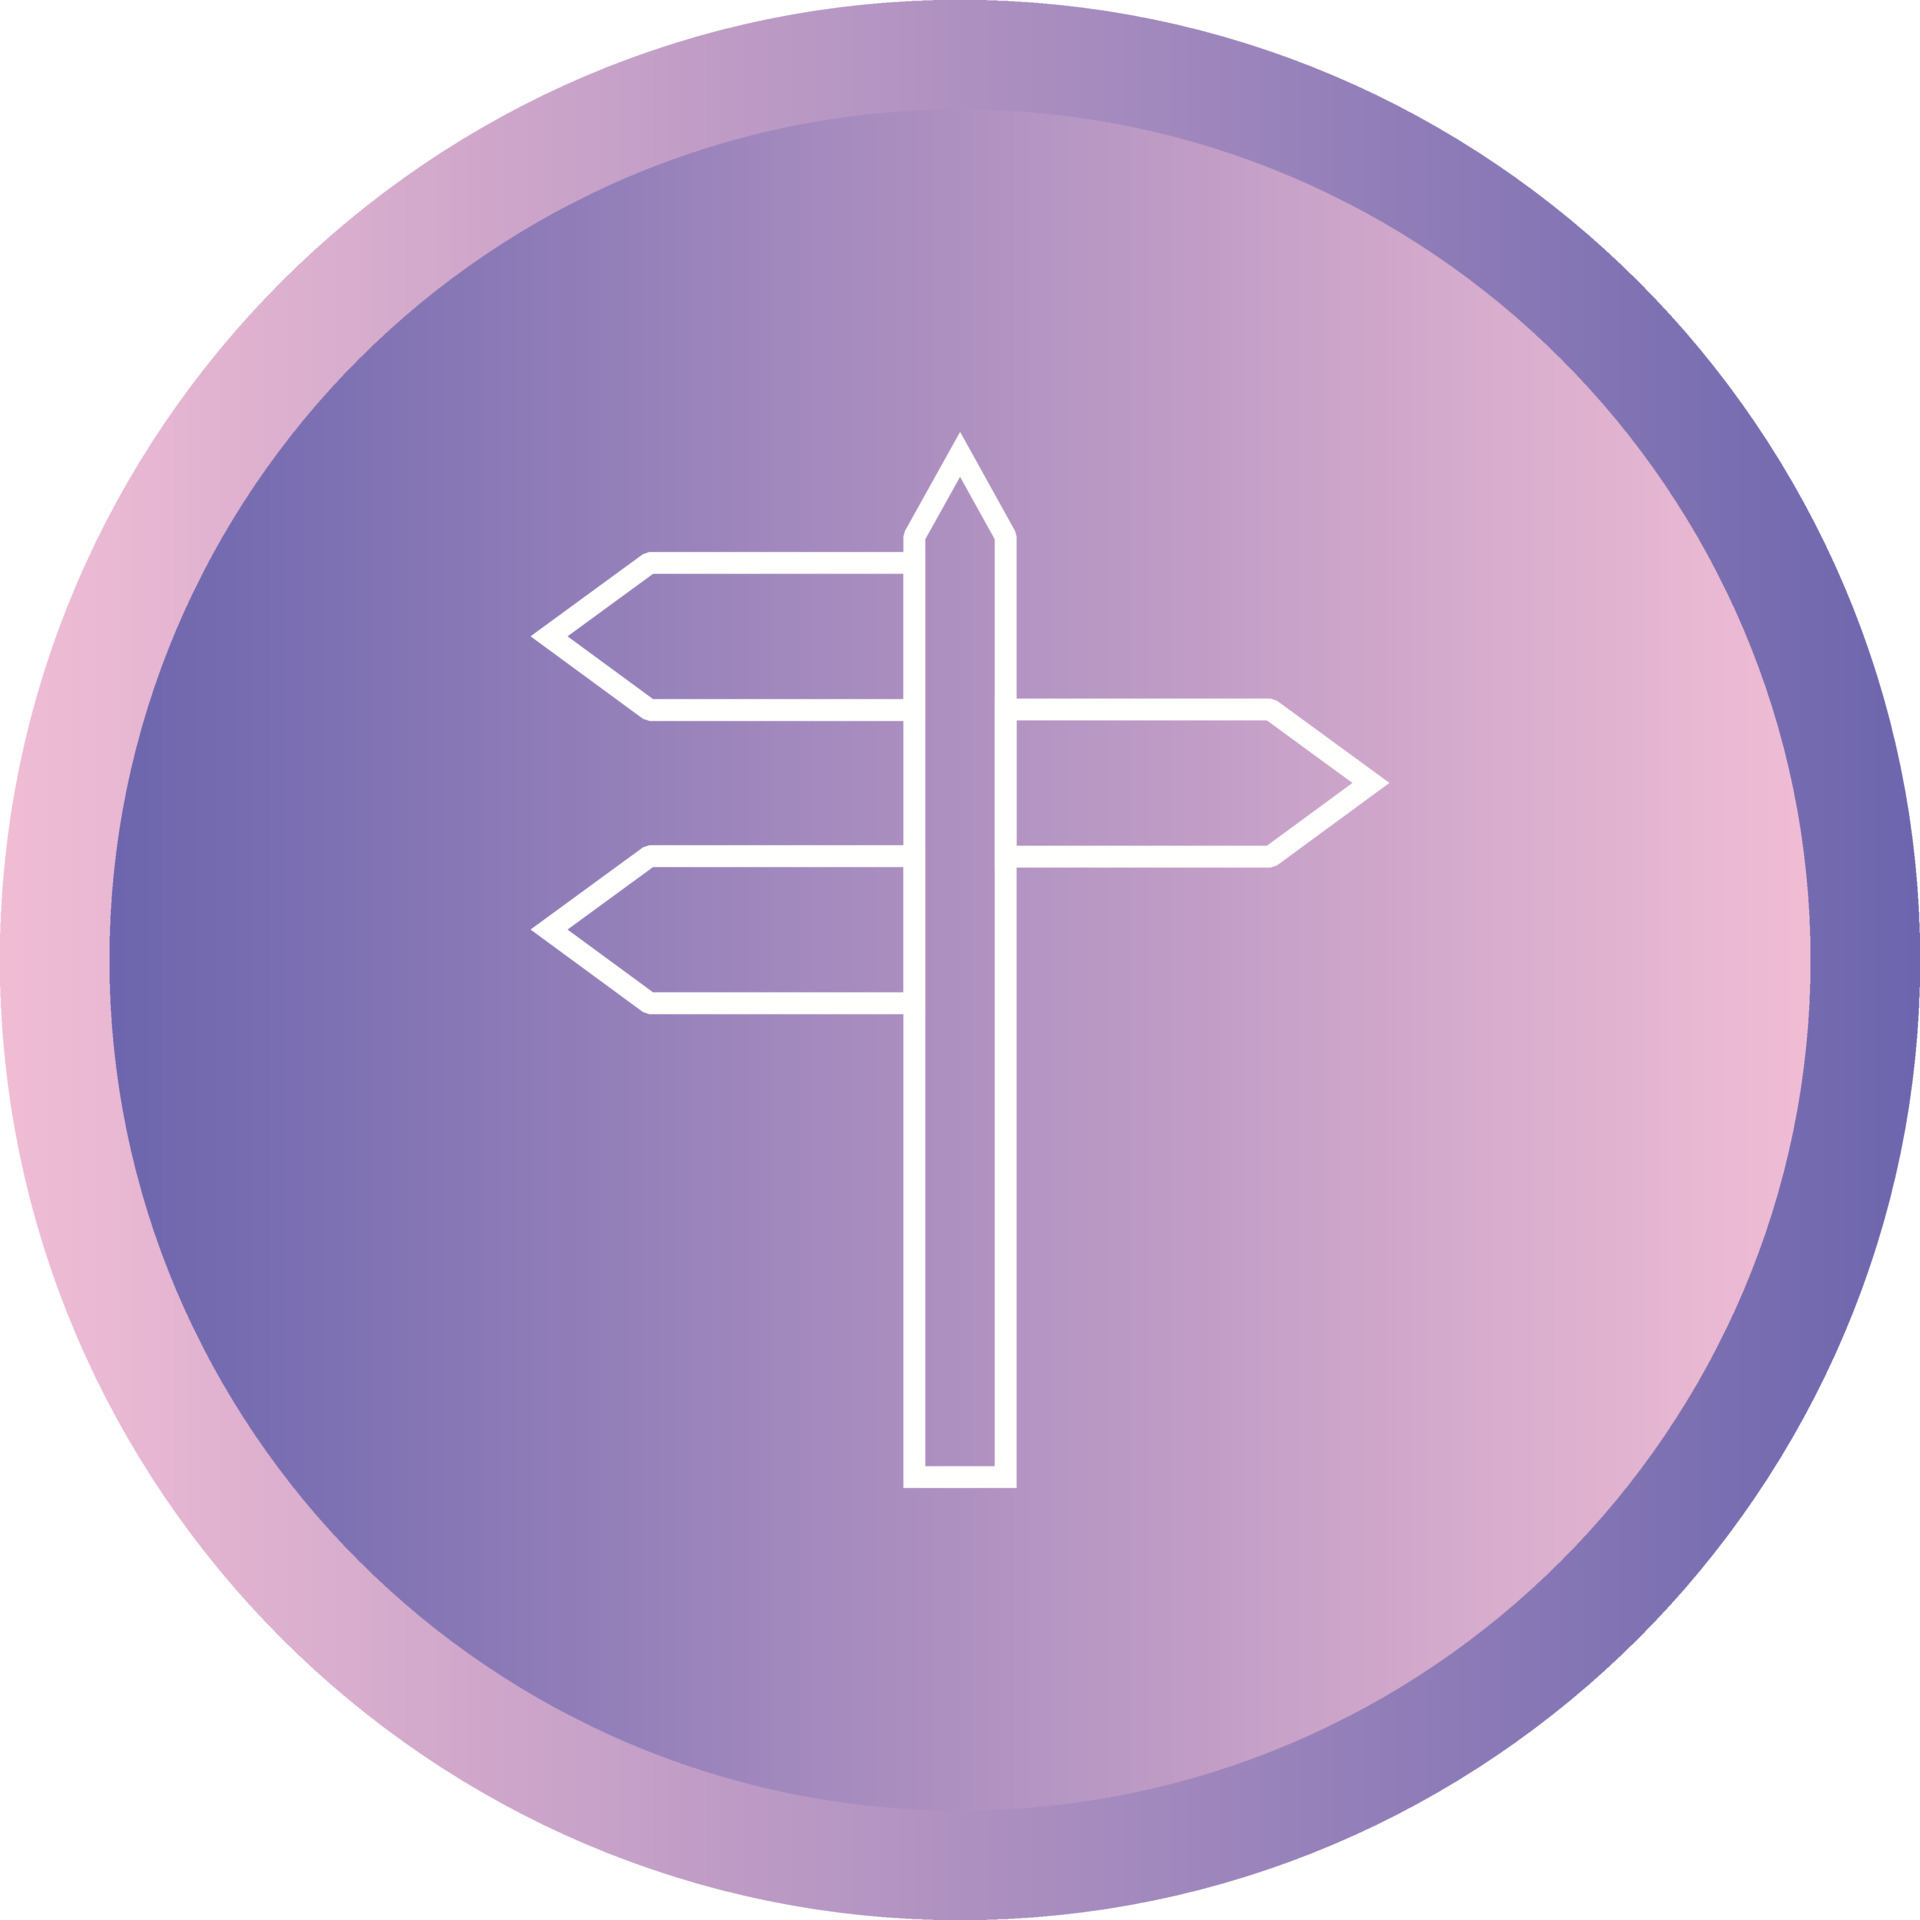 directional-arrows-icon-stock-illustration-illustration-of-symbol